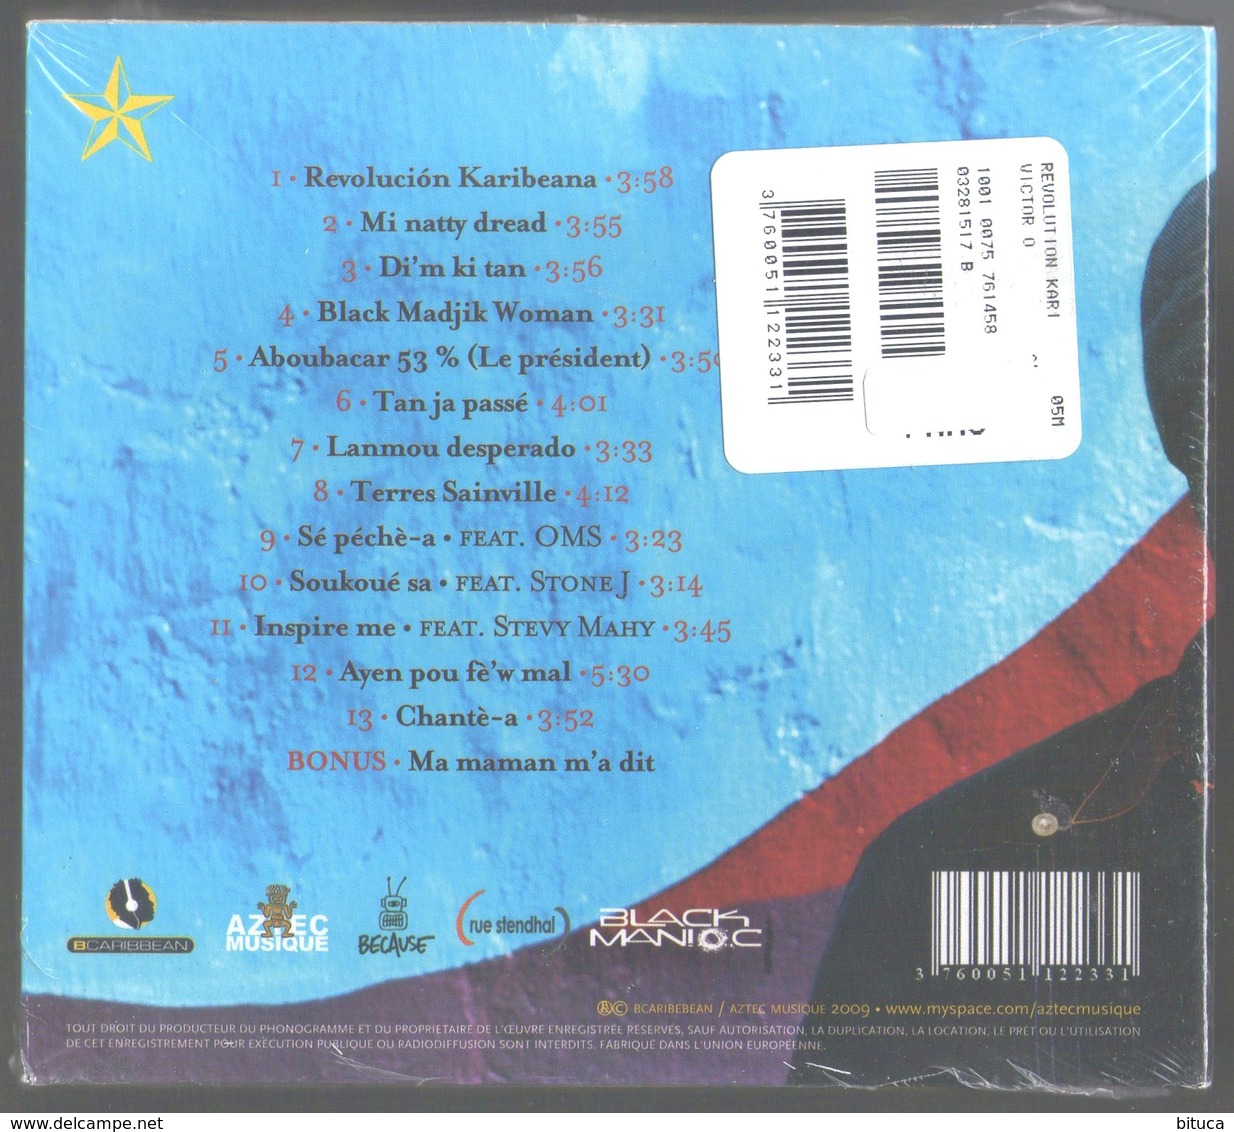 CD 14 TITRES VICTOR O REVOLUCION KARIBEANA NEUF SOUS BLISTER & RARE - Musiques Du Monde